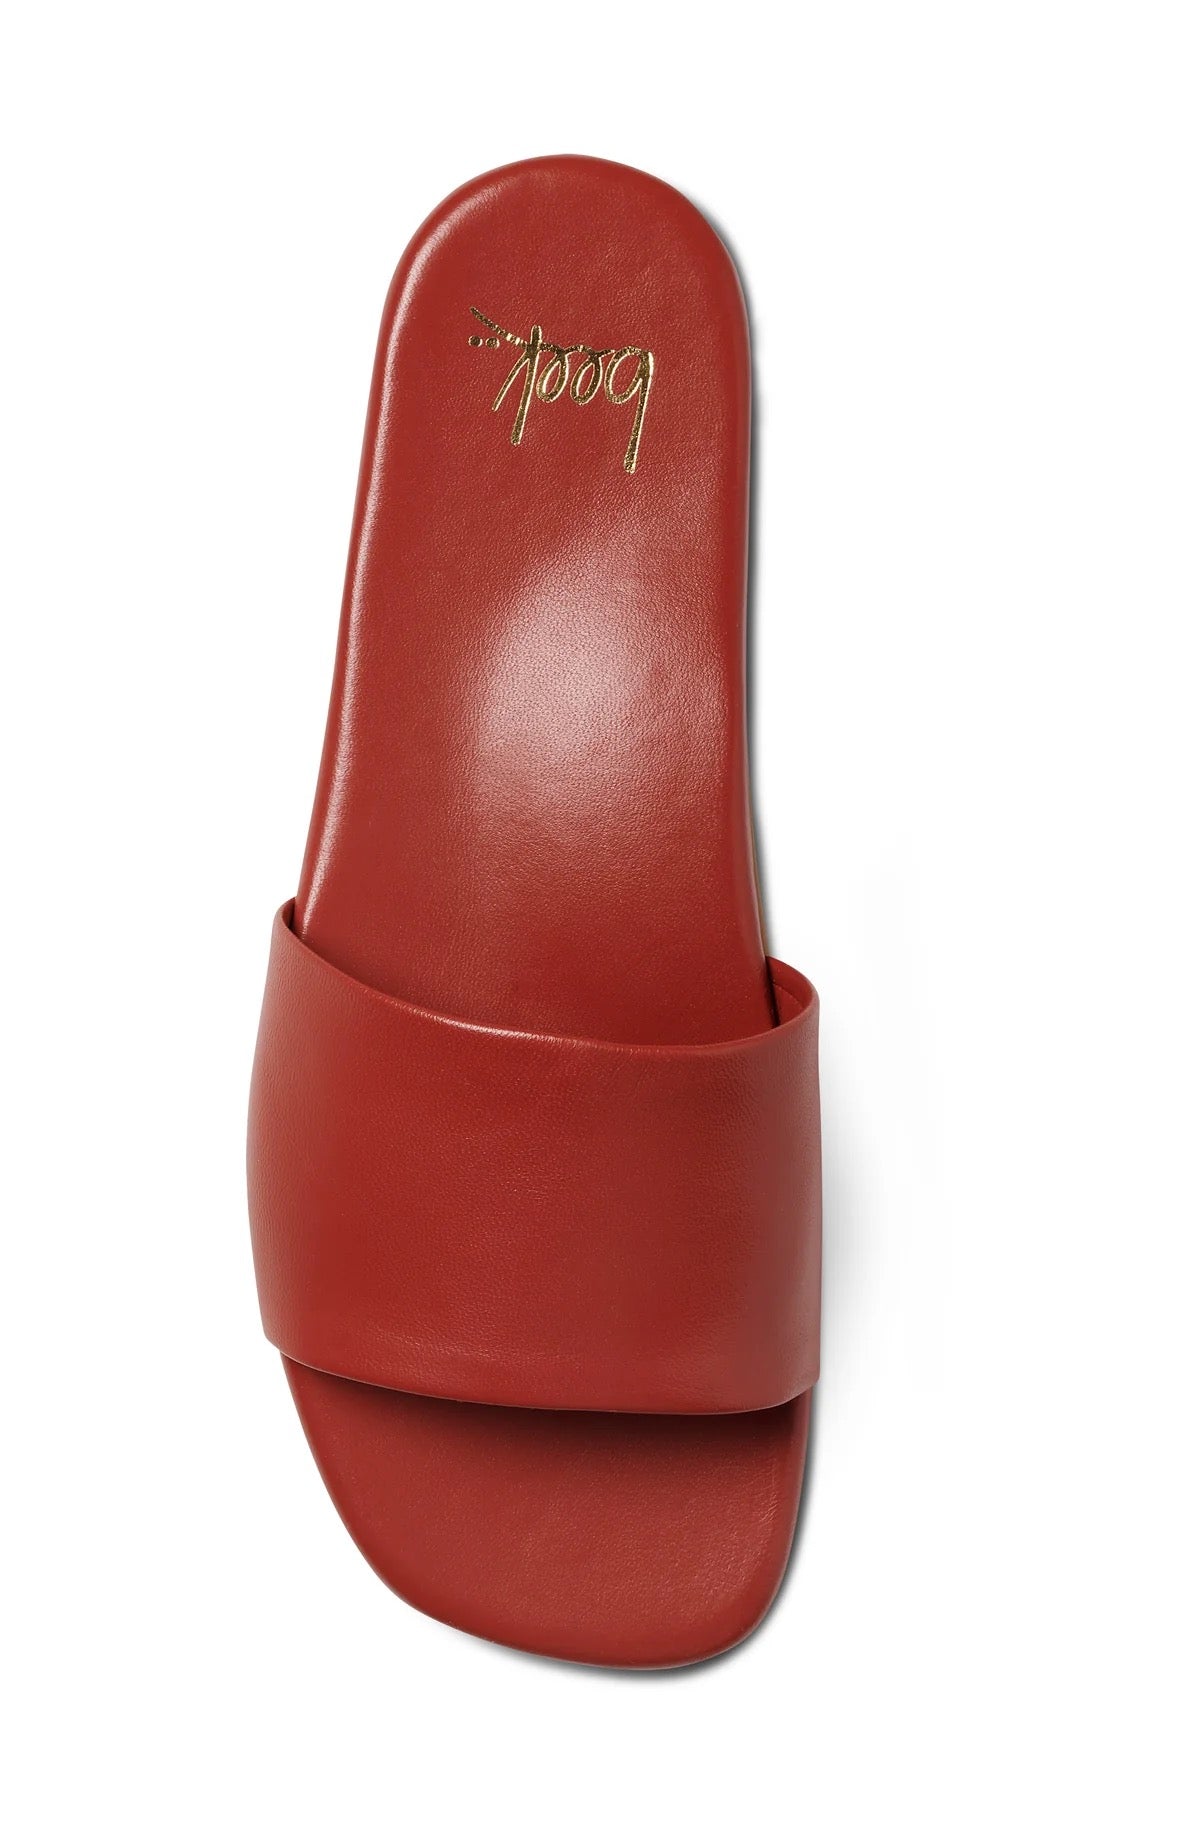 Beek Honeybird Leather Slide Sandal in Red